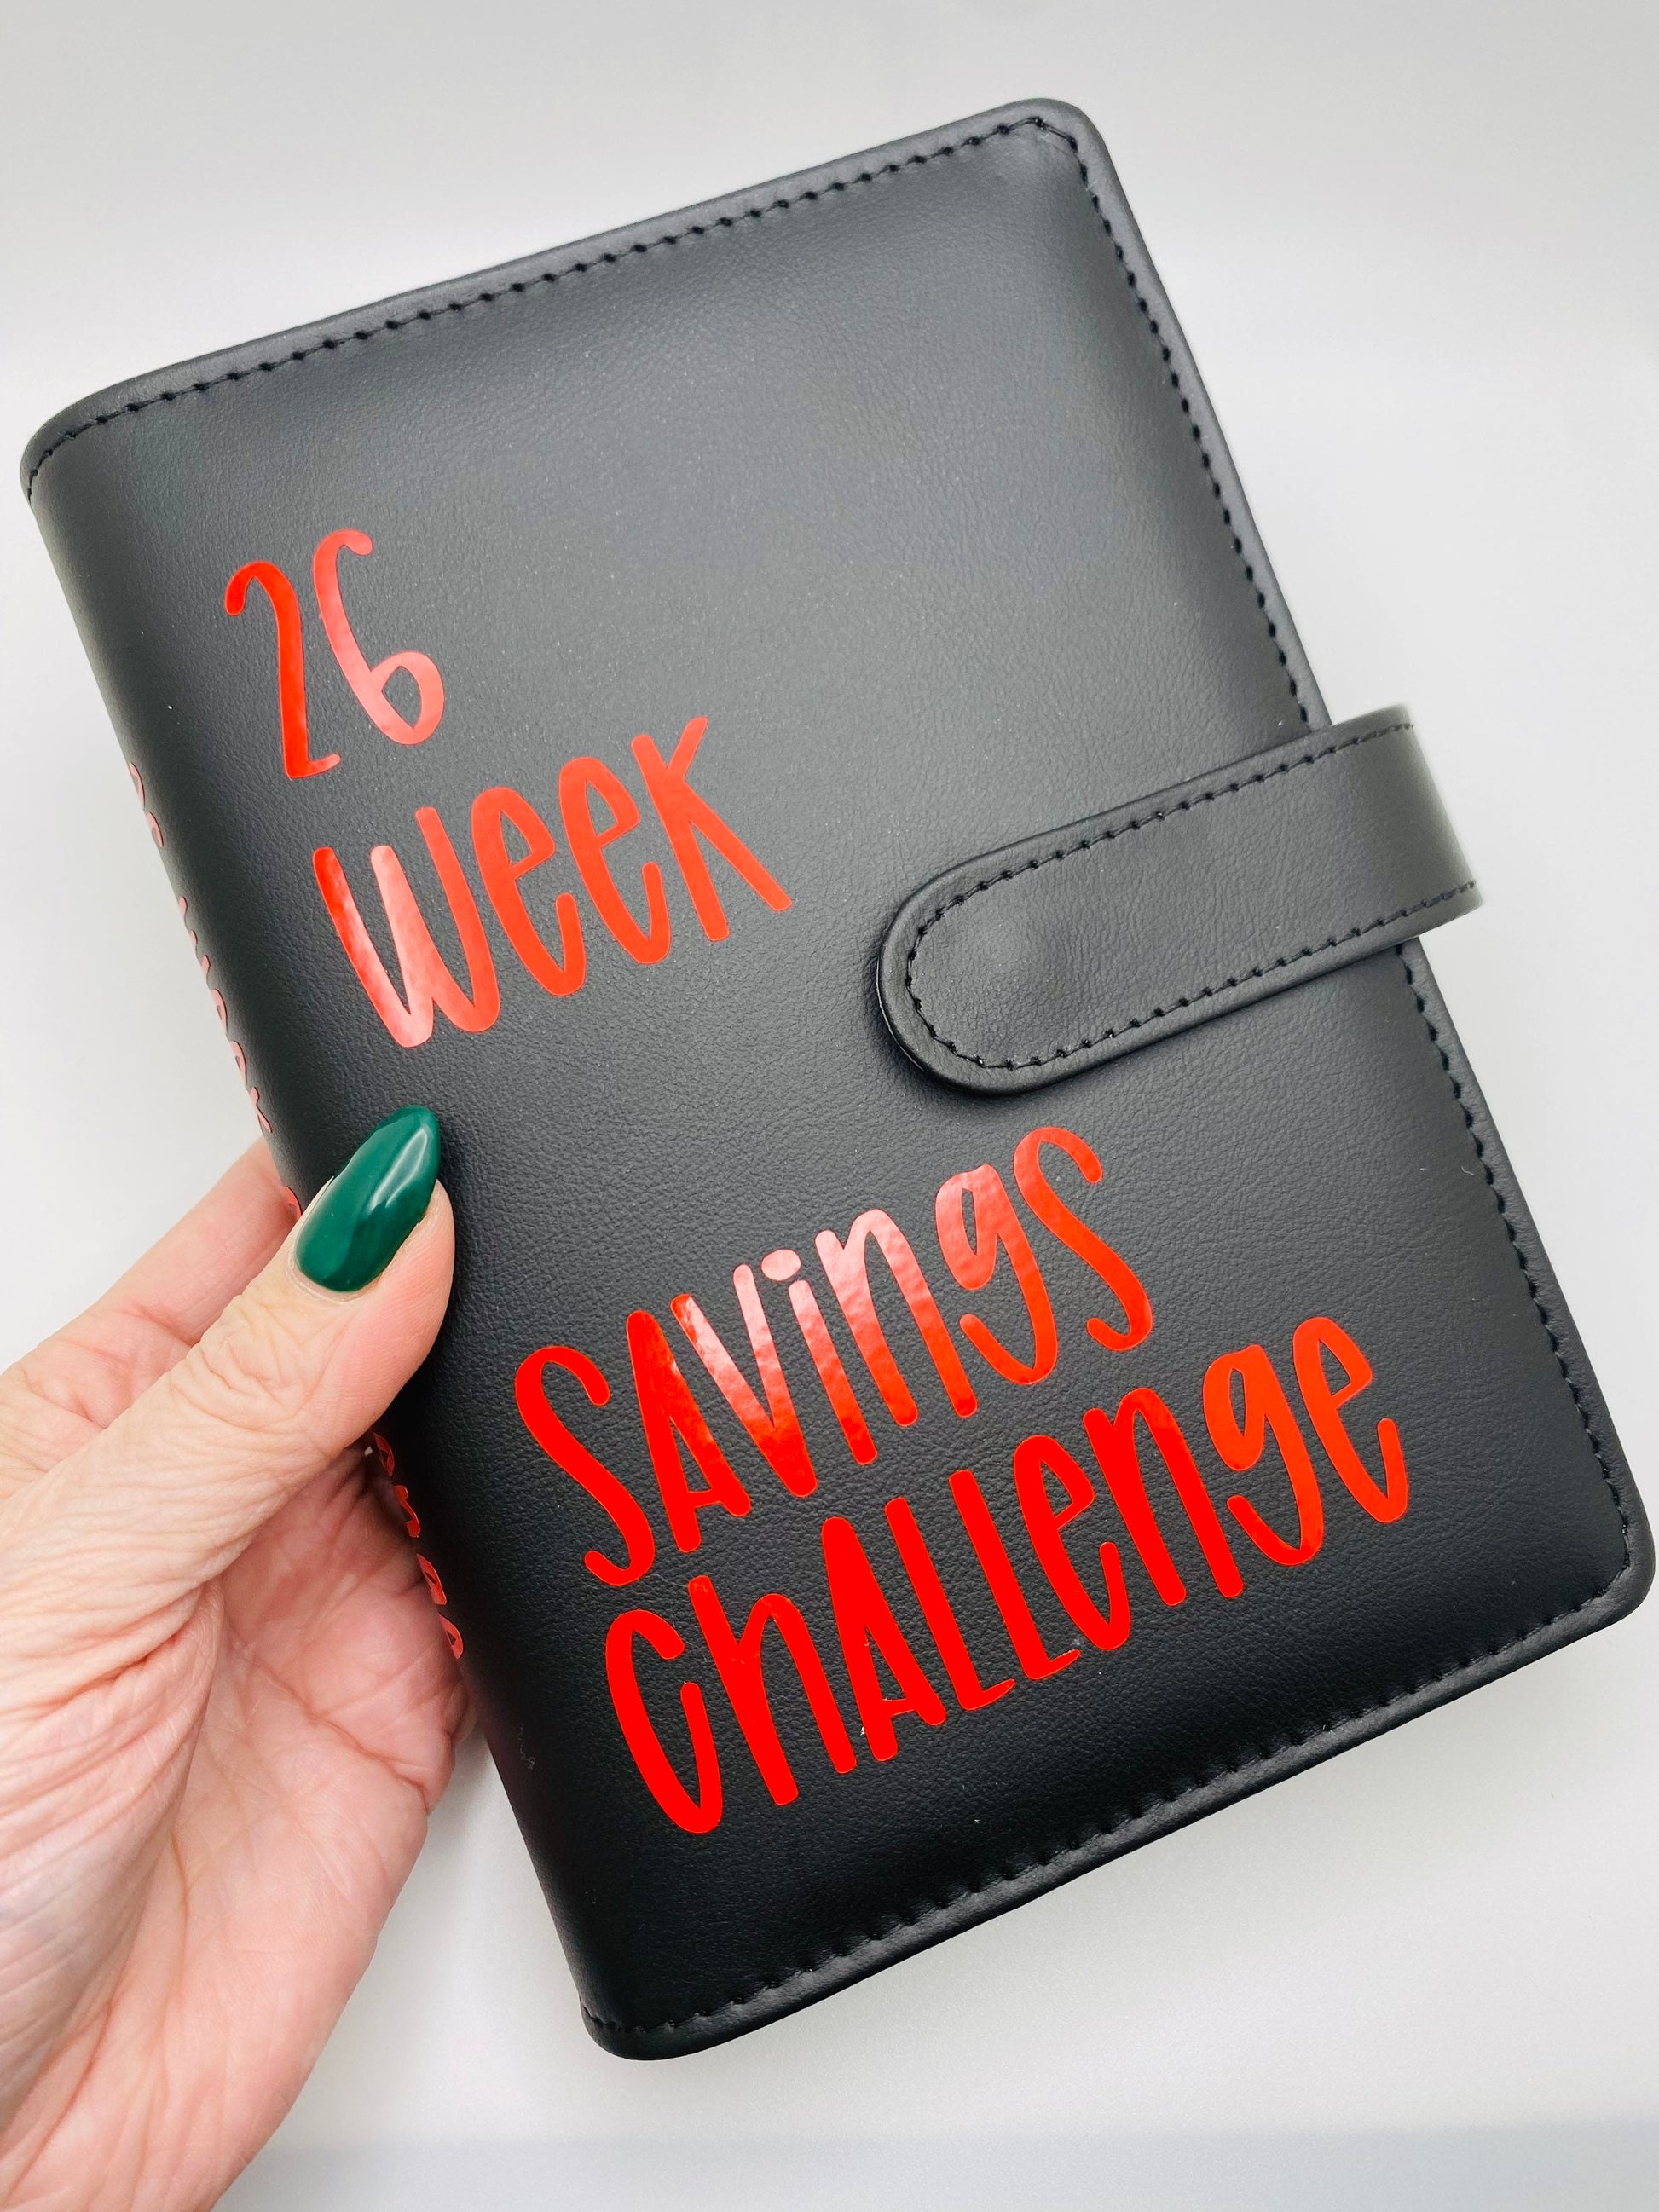 A6 Sized 52 Week Saving Challenge Budget Binder A6 Size Cash Budget Budget  Planner Saving Binder Cash Stuffing Cash Envelopes 